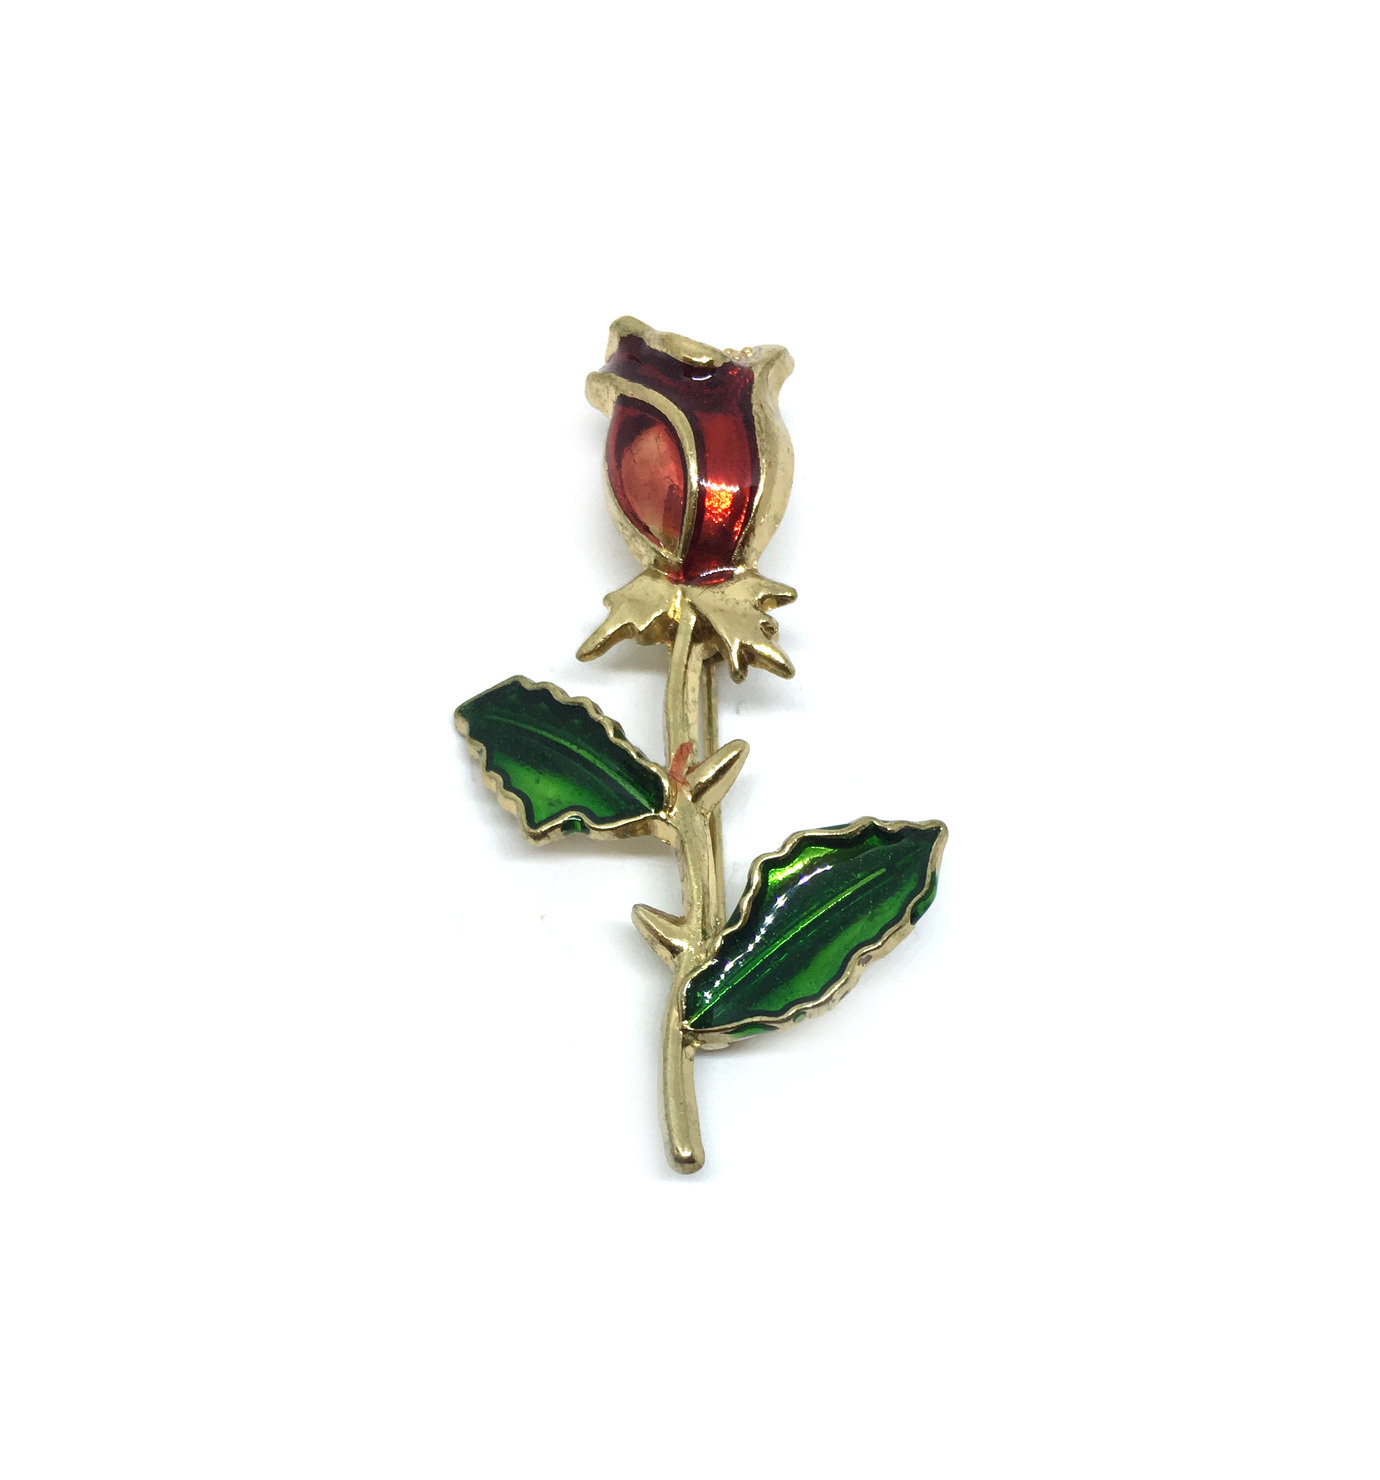 Red Rose Brooch Pin